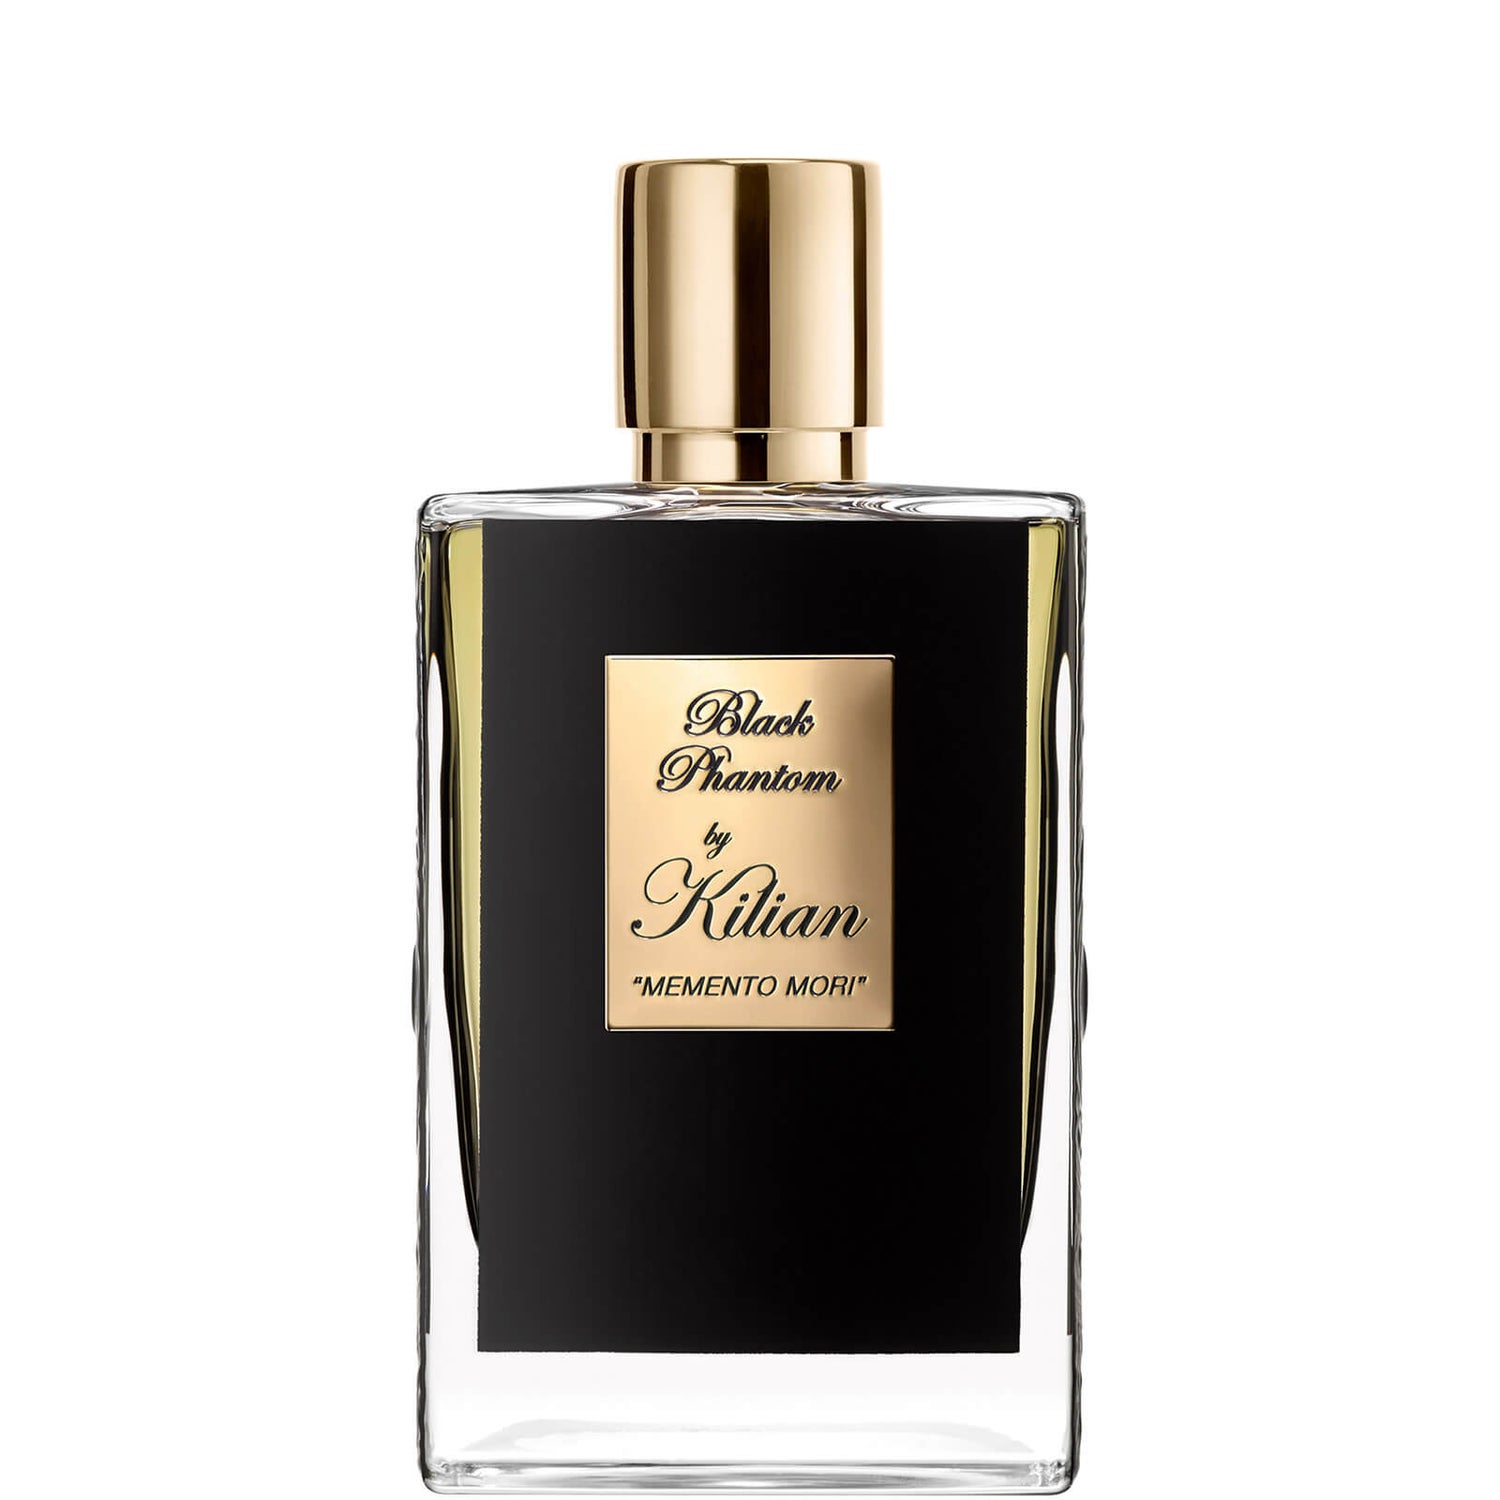 Kilian Black Phantom Eau de Parfum